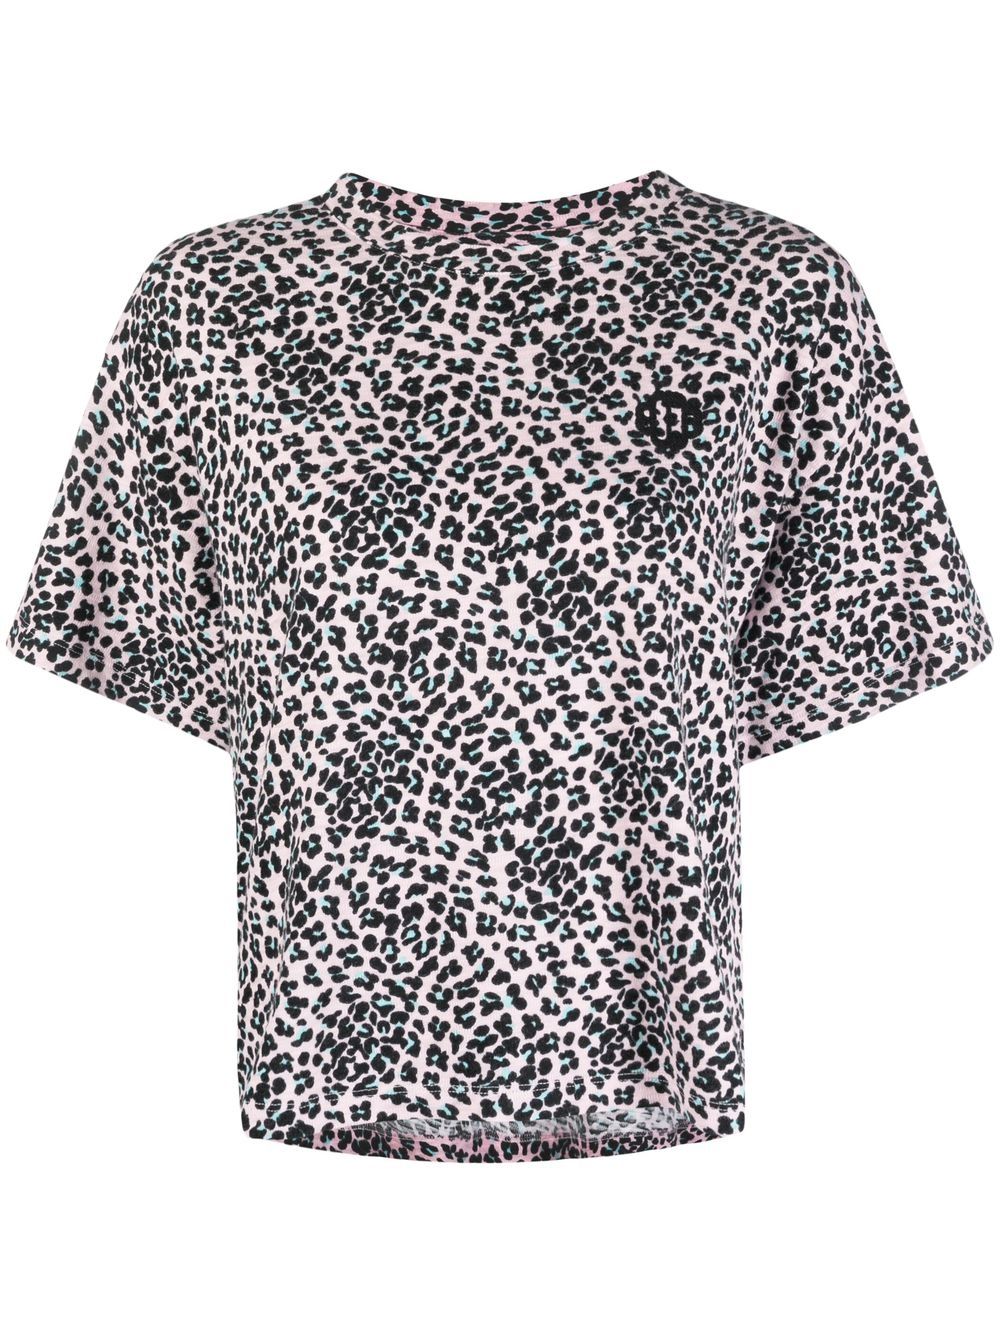 Maje Leopard Print Cotton T-shirt - Farfetch